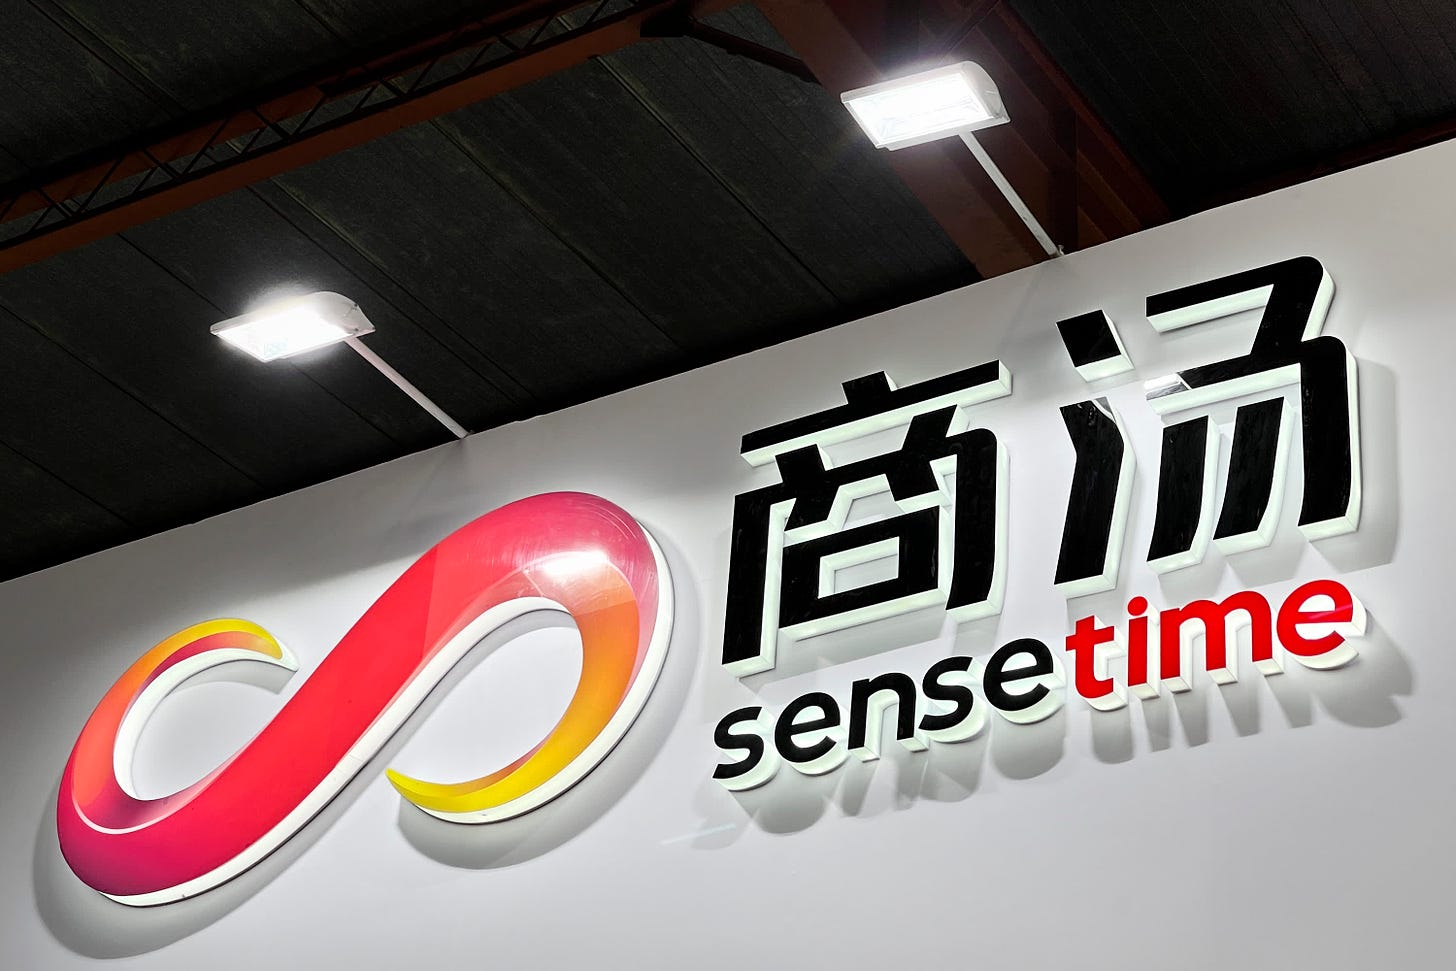 China's SenseTime postpones $767 million Hong Kong IPO after U.S. ban